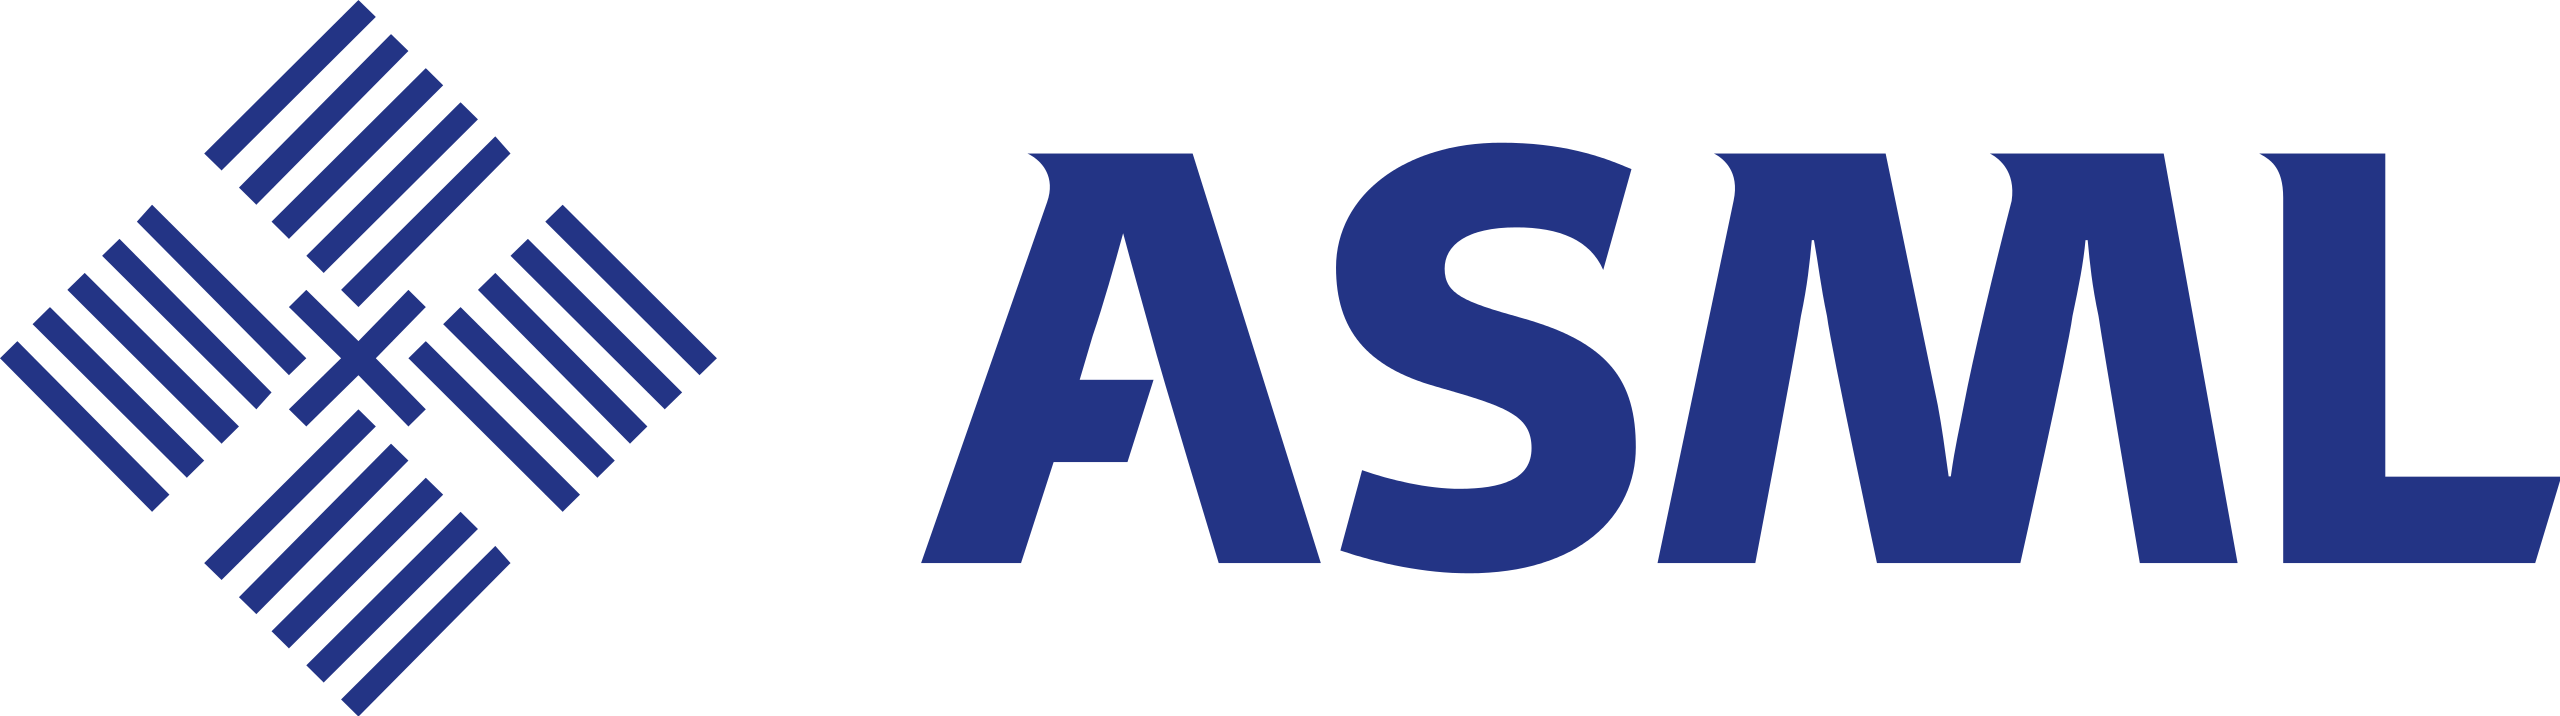 asml logo